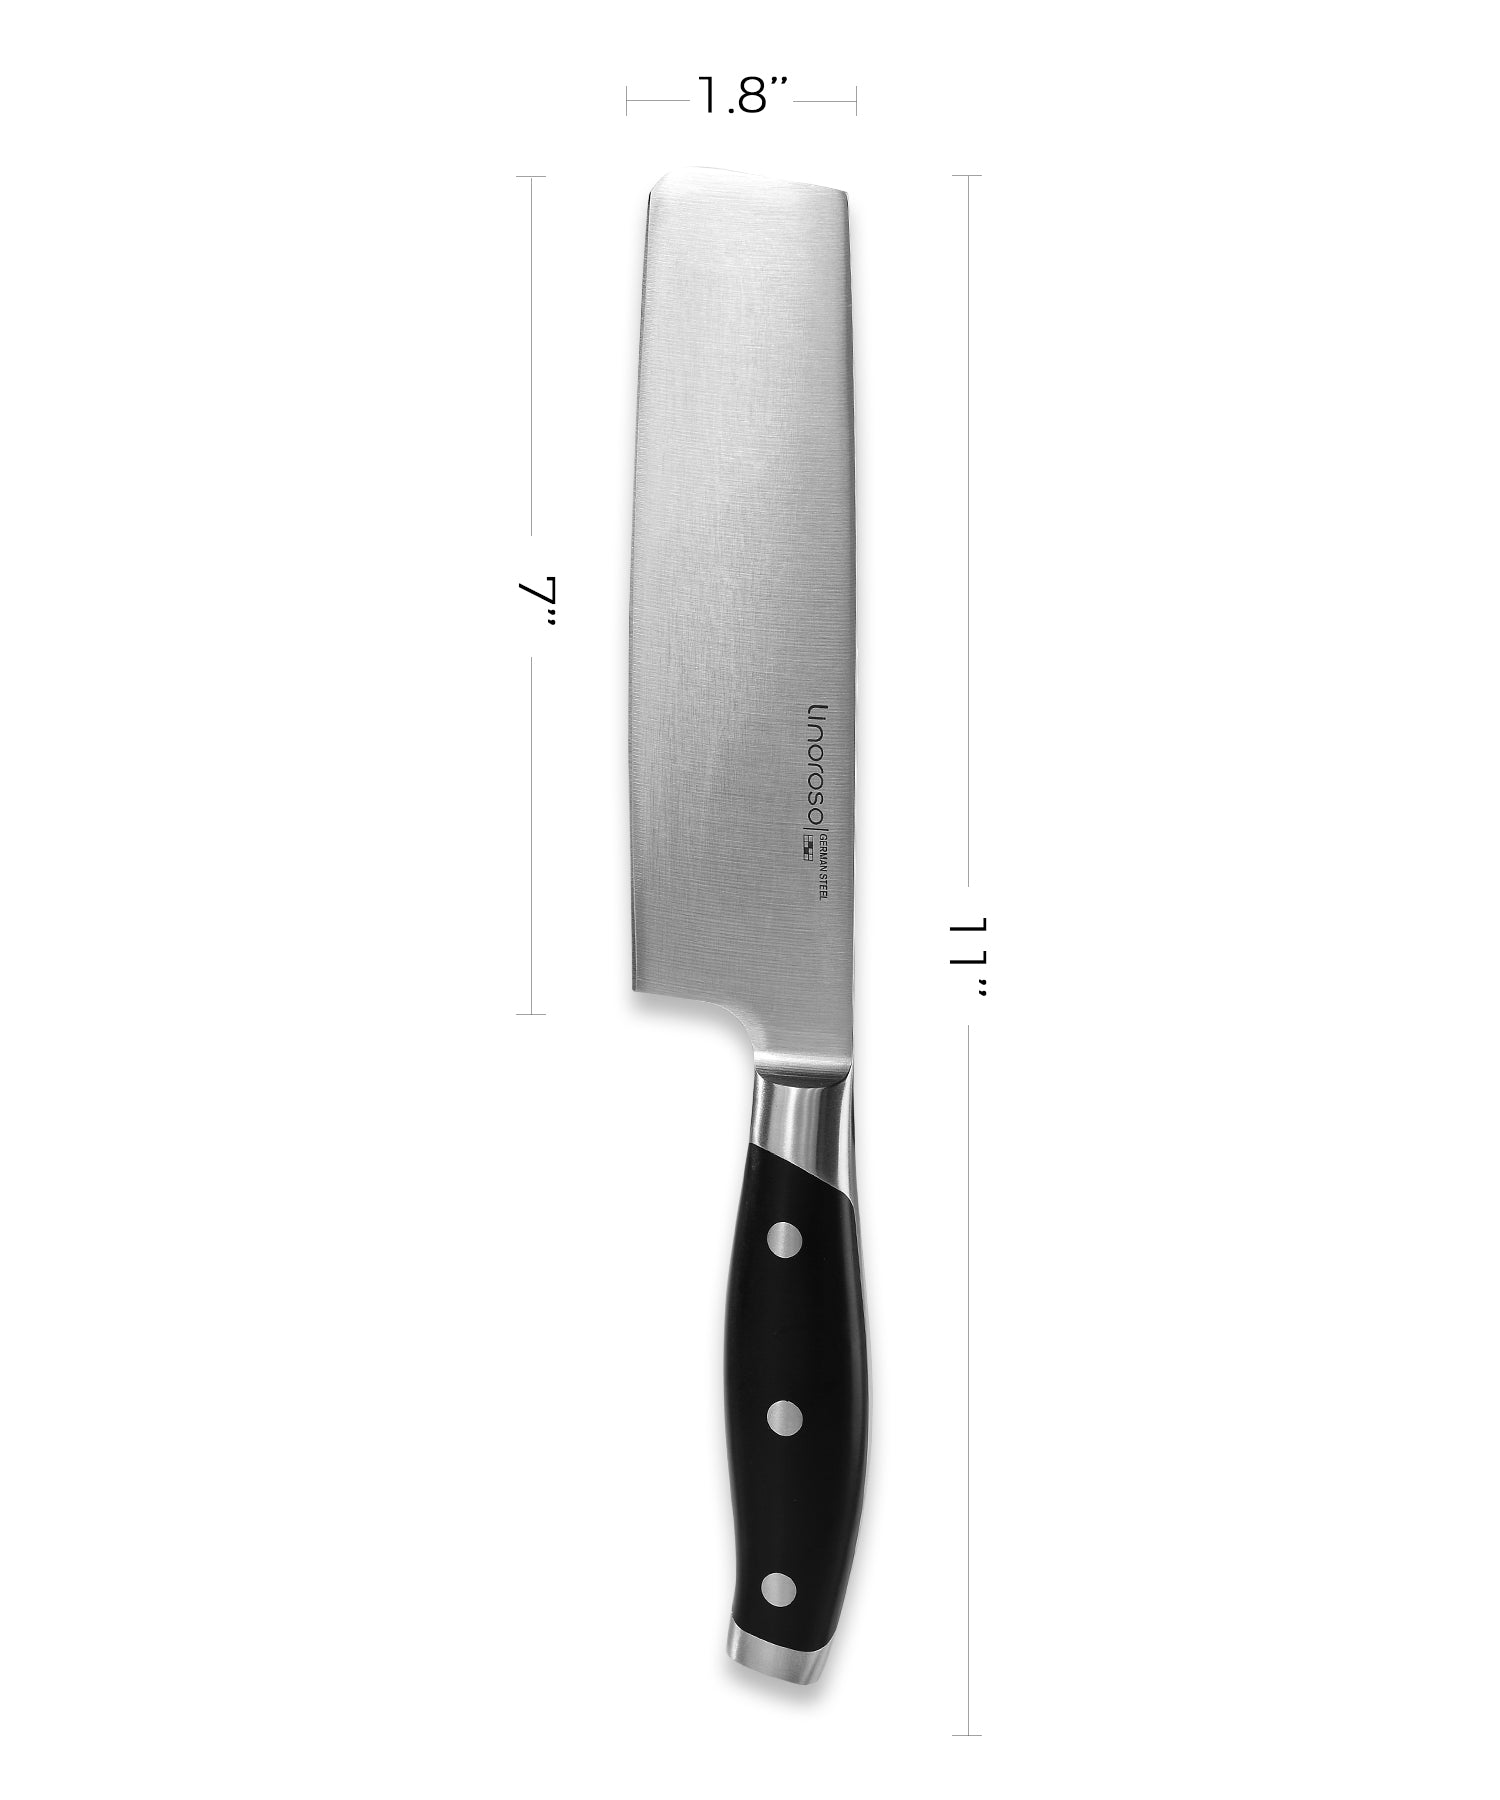 Linoroso Classic 7 inch Nakiri Knife